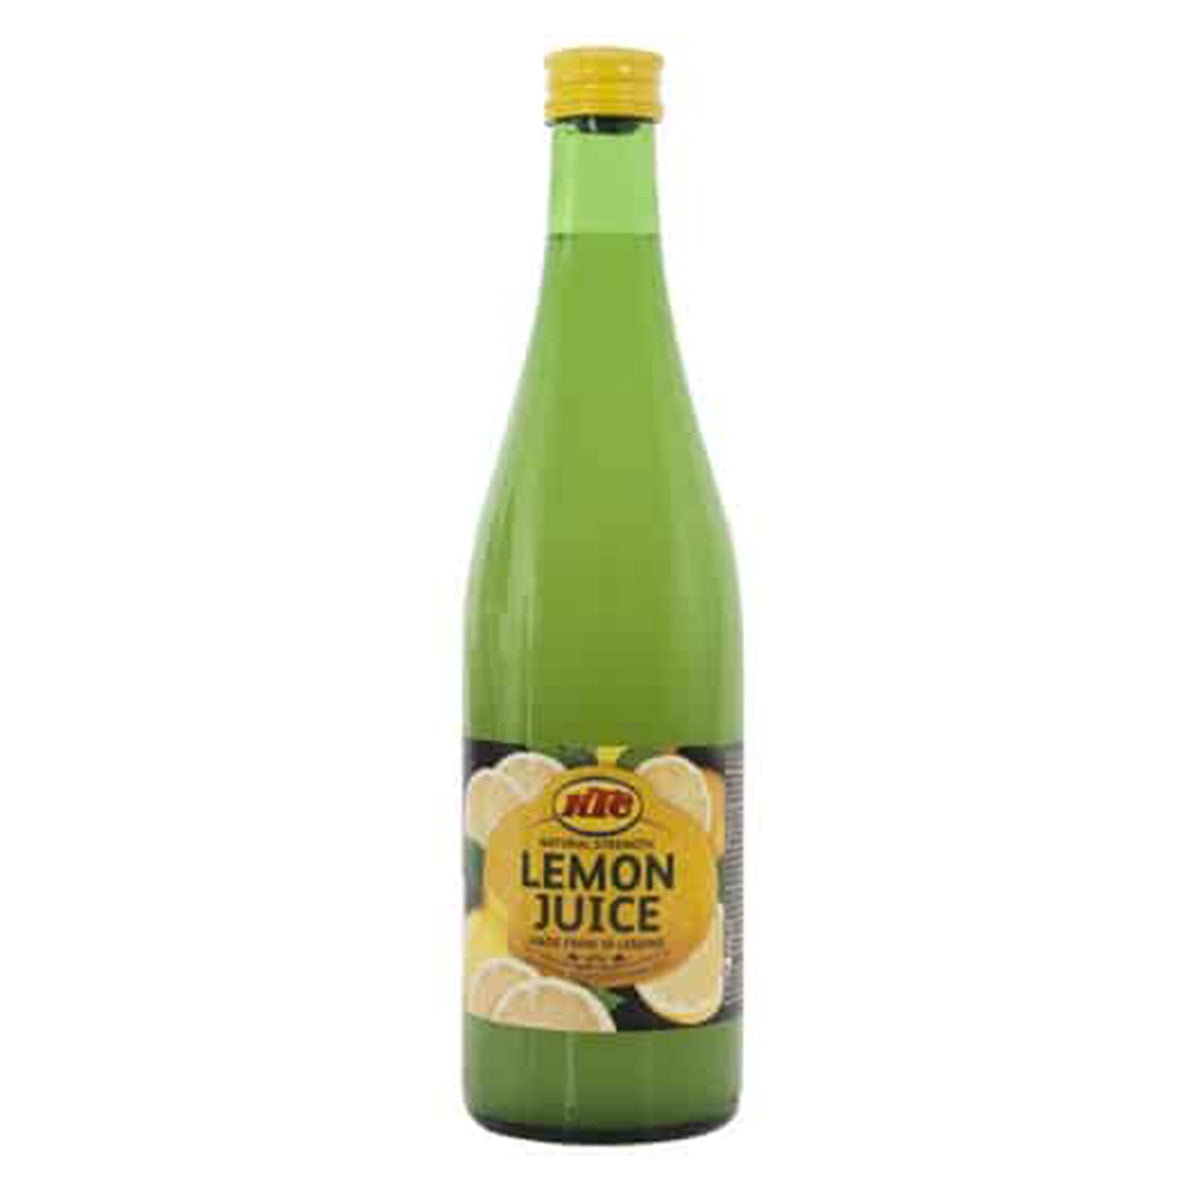 KTC - Lemon Juice - 250ml - Continental Food Store